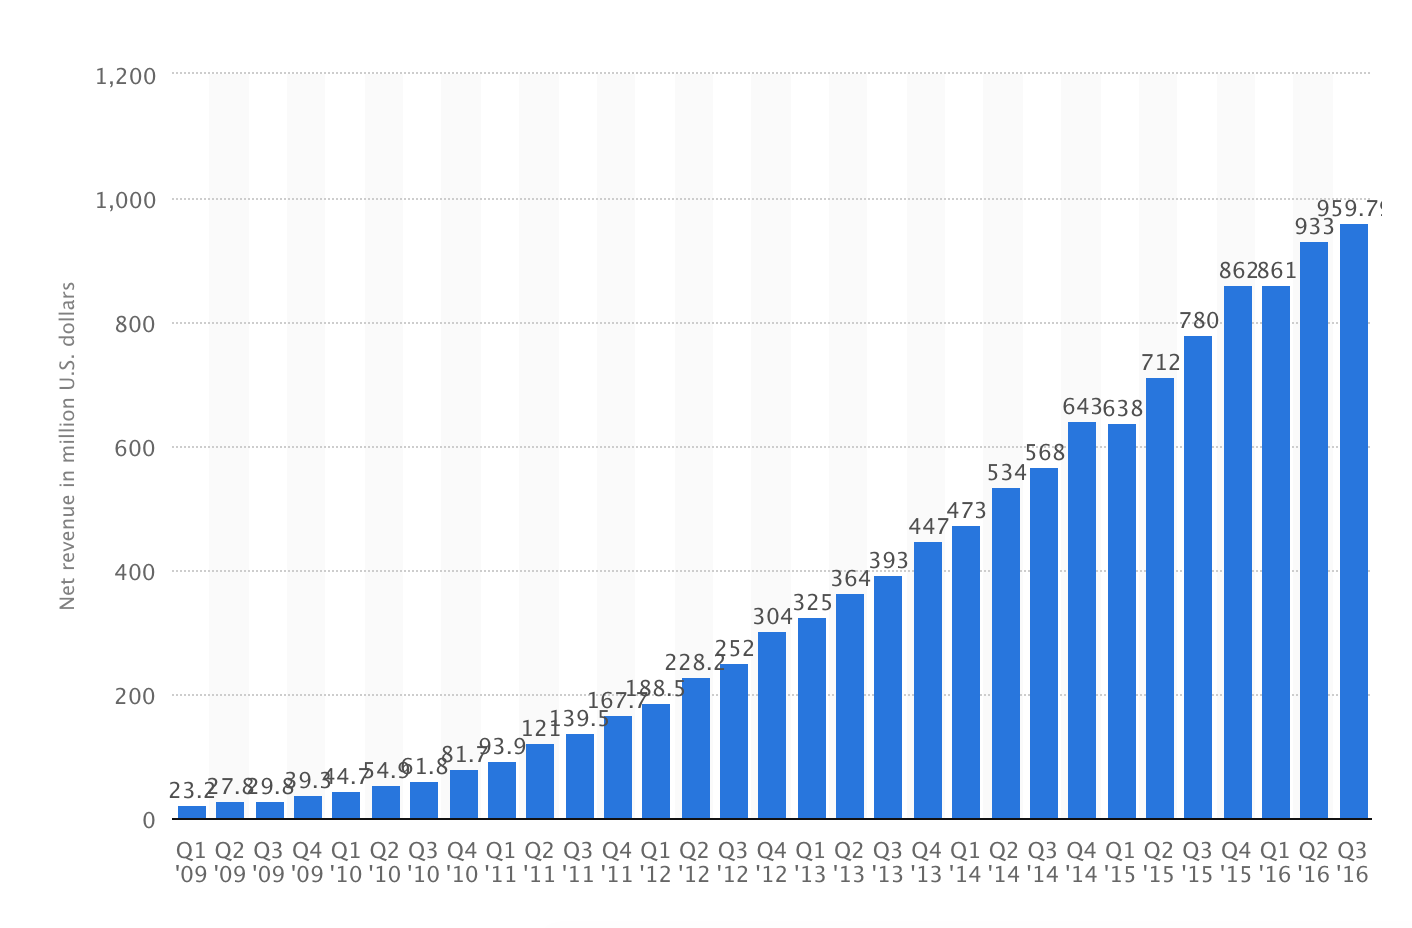 LinkedIn’s Net Revenue Has Growth from 2009-2016